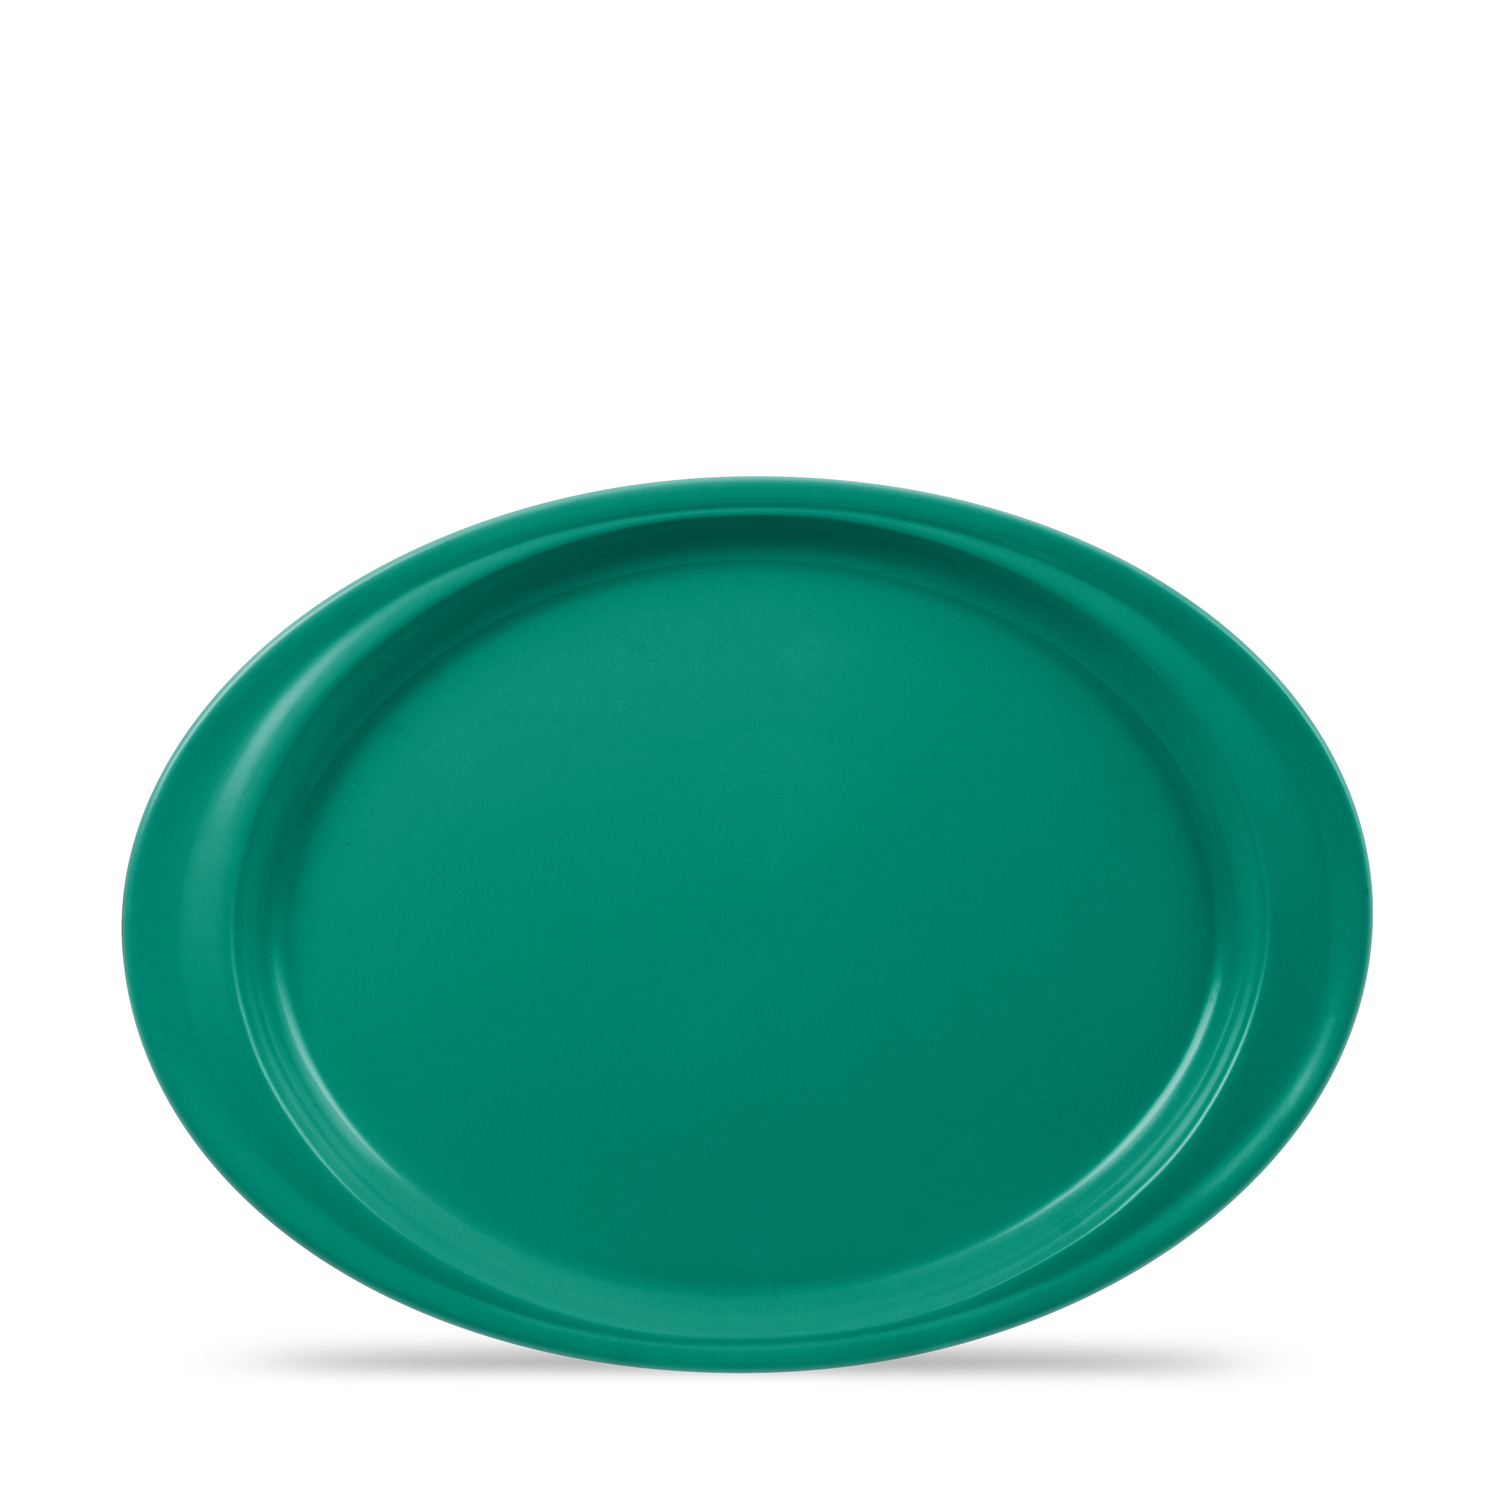 Melamine 14" Handled Oval Platter  - Jade Green